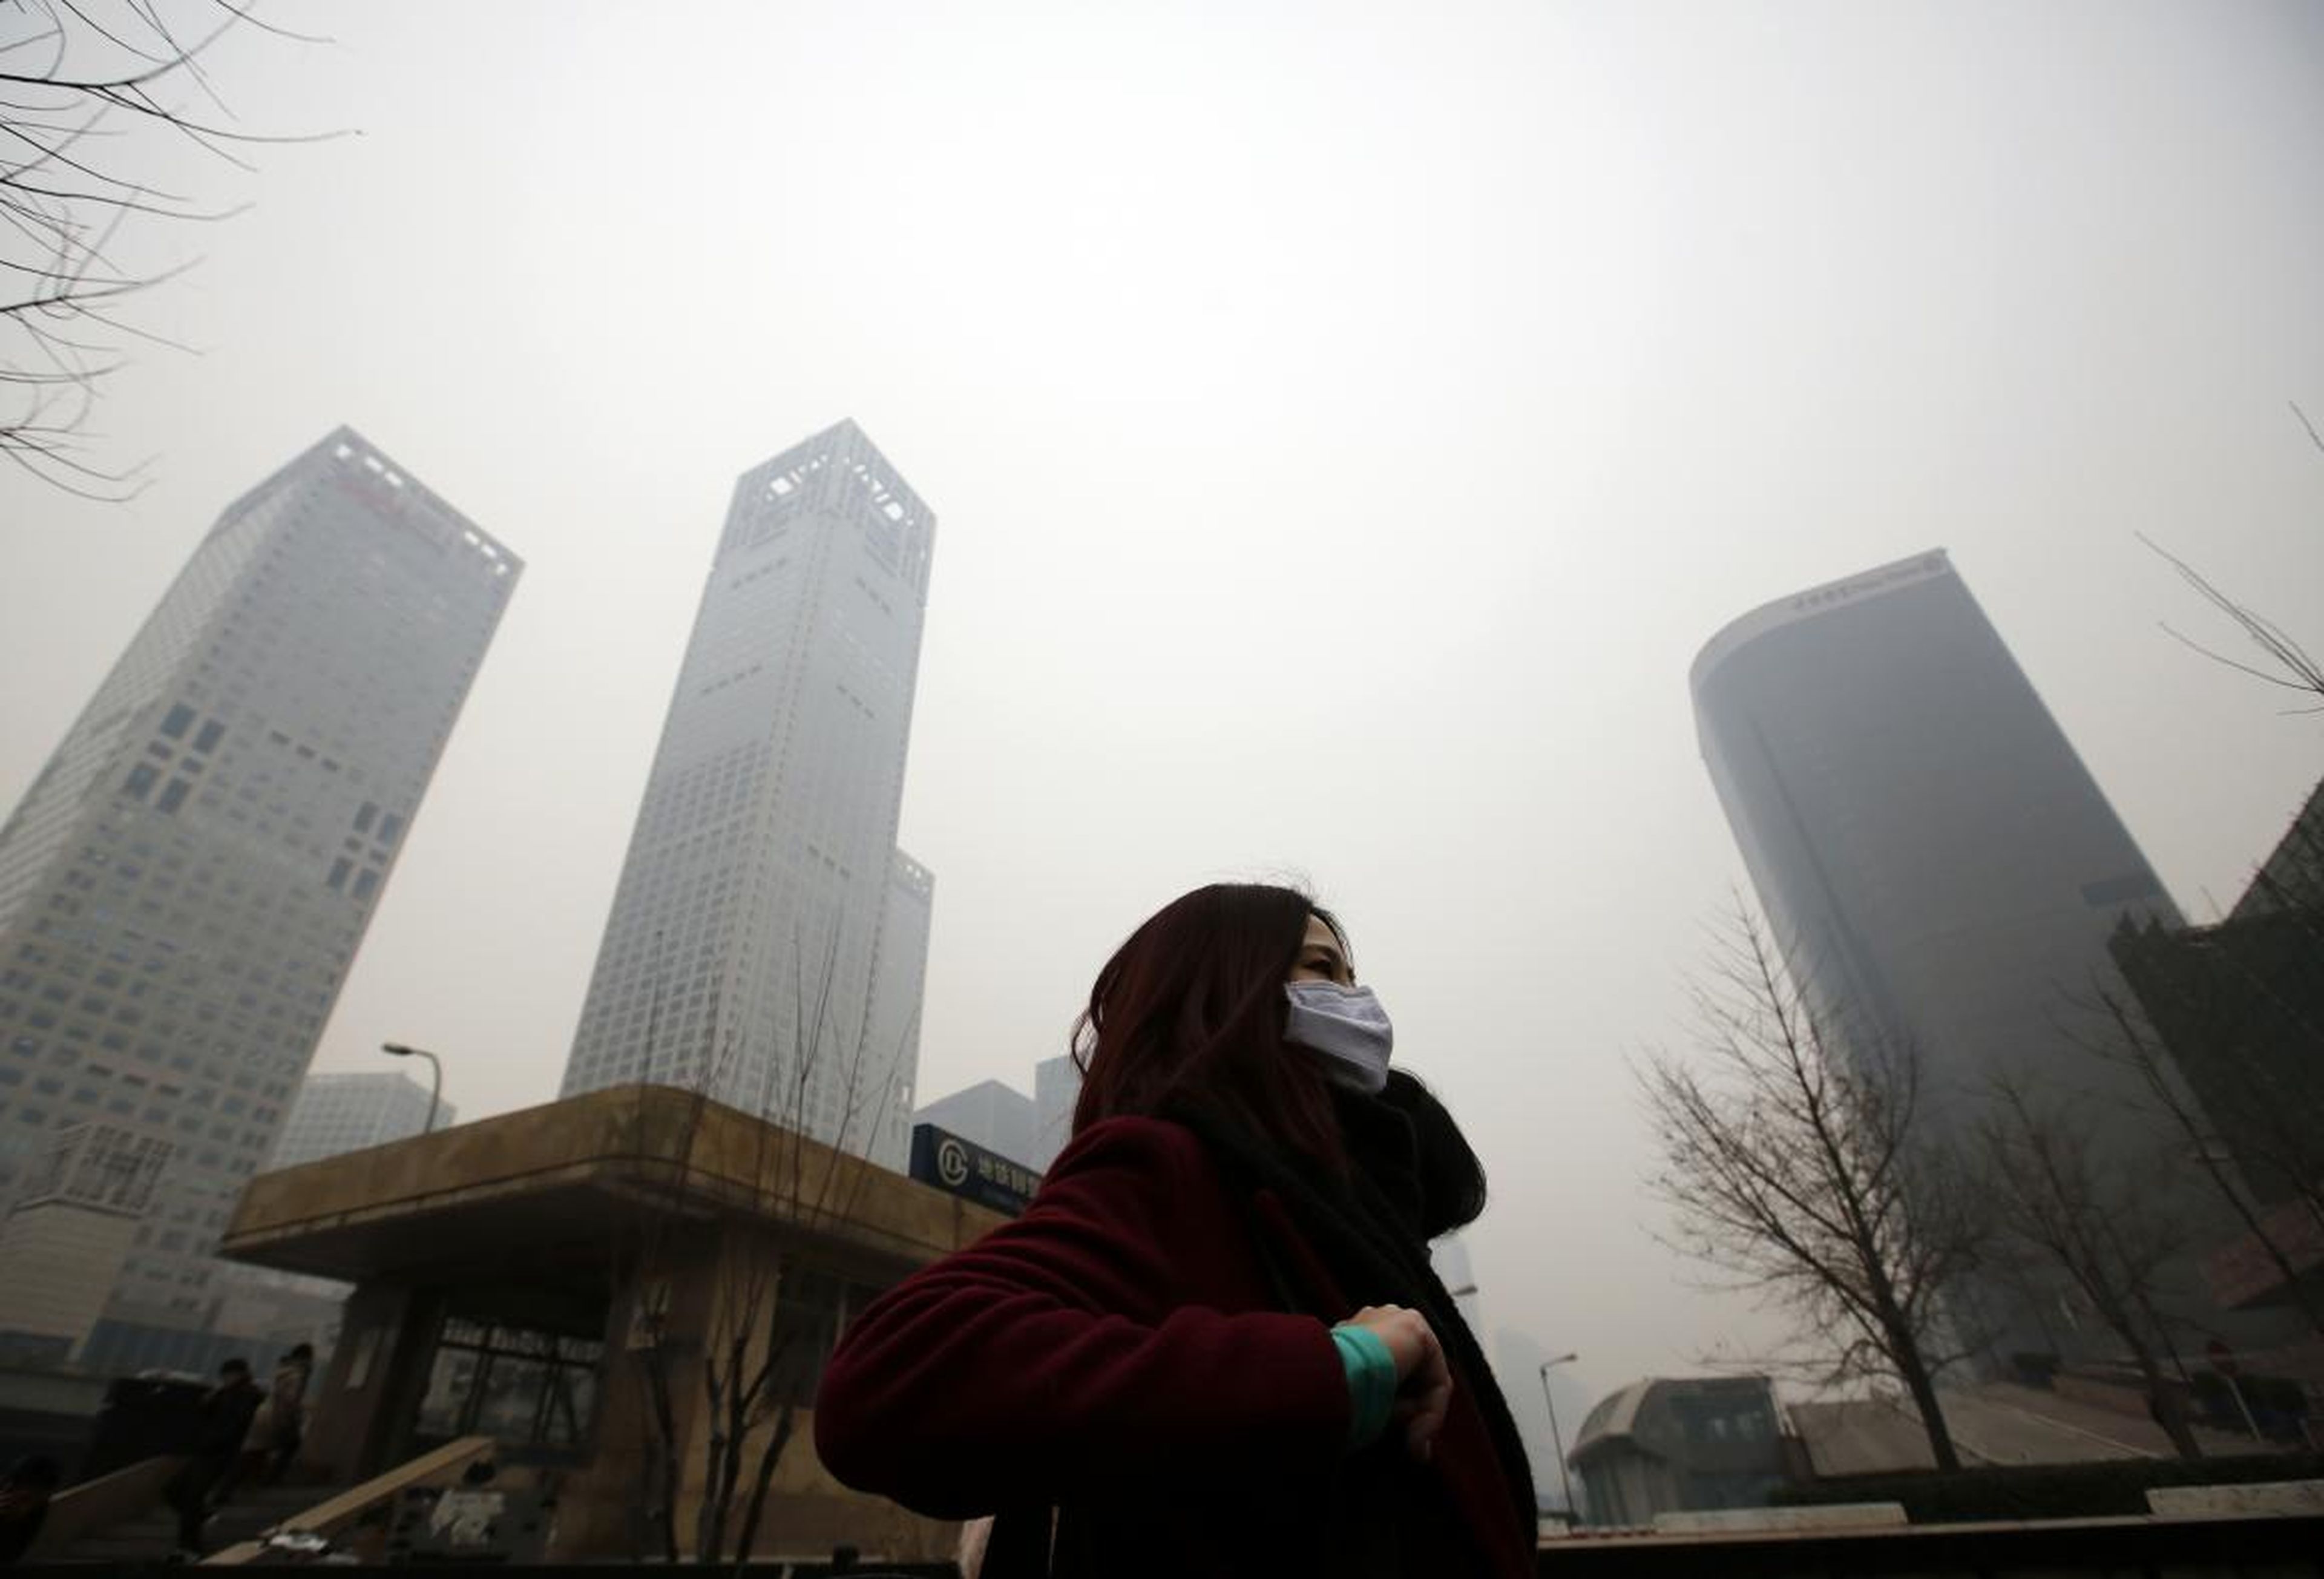 A woman makes her way through a heavy haze in Beijing.